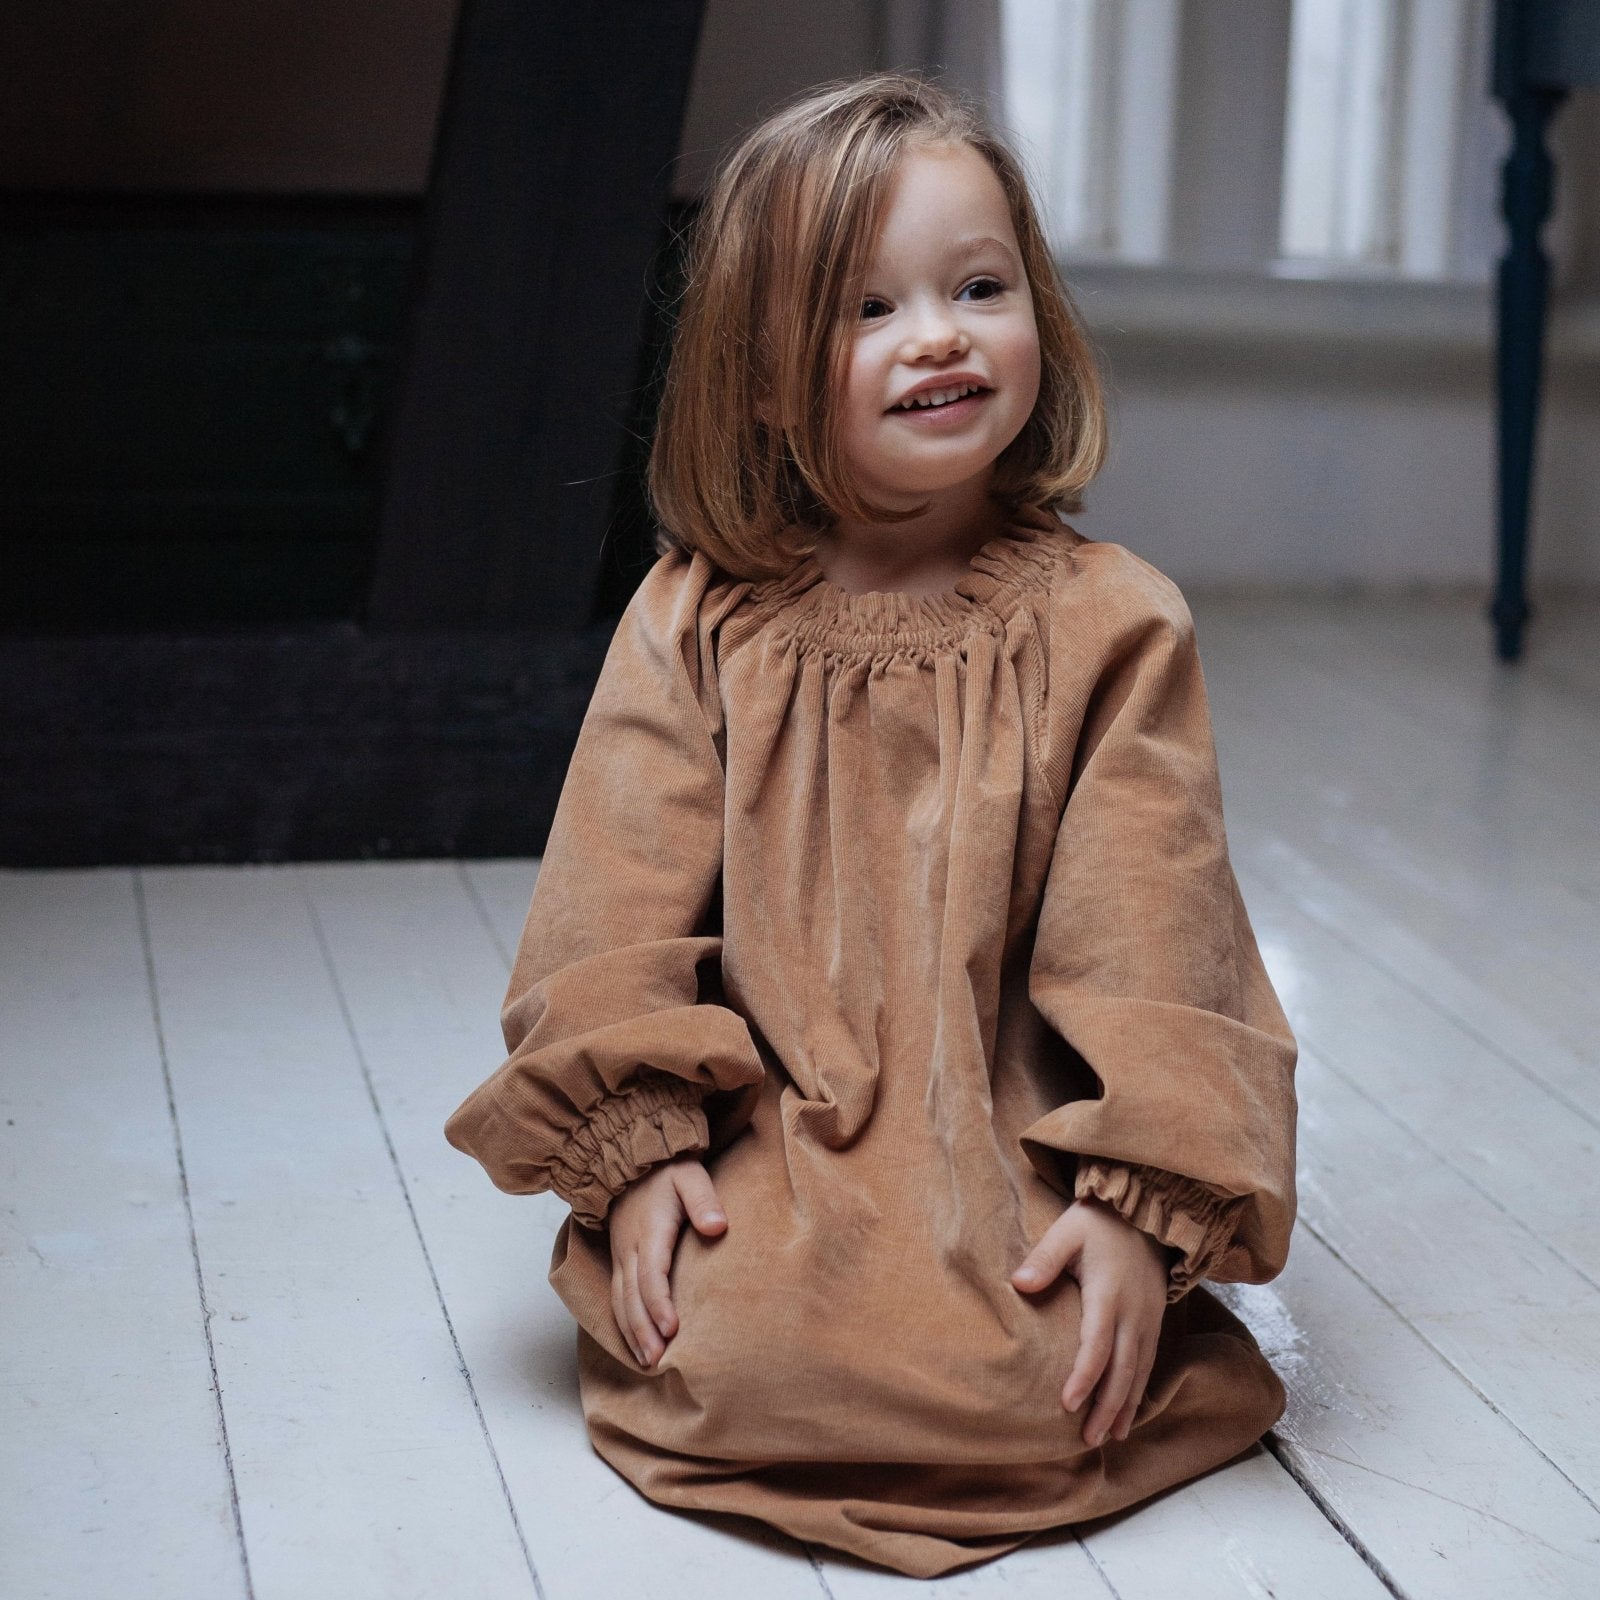 Briar Corduroy Kleid Beige find Stylish Fashion for Little People- at Little Foxx Concept Store